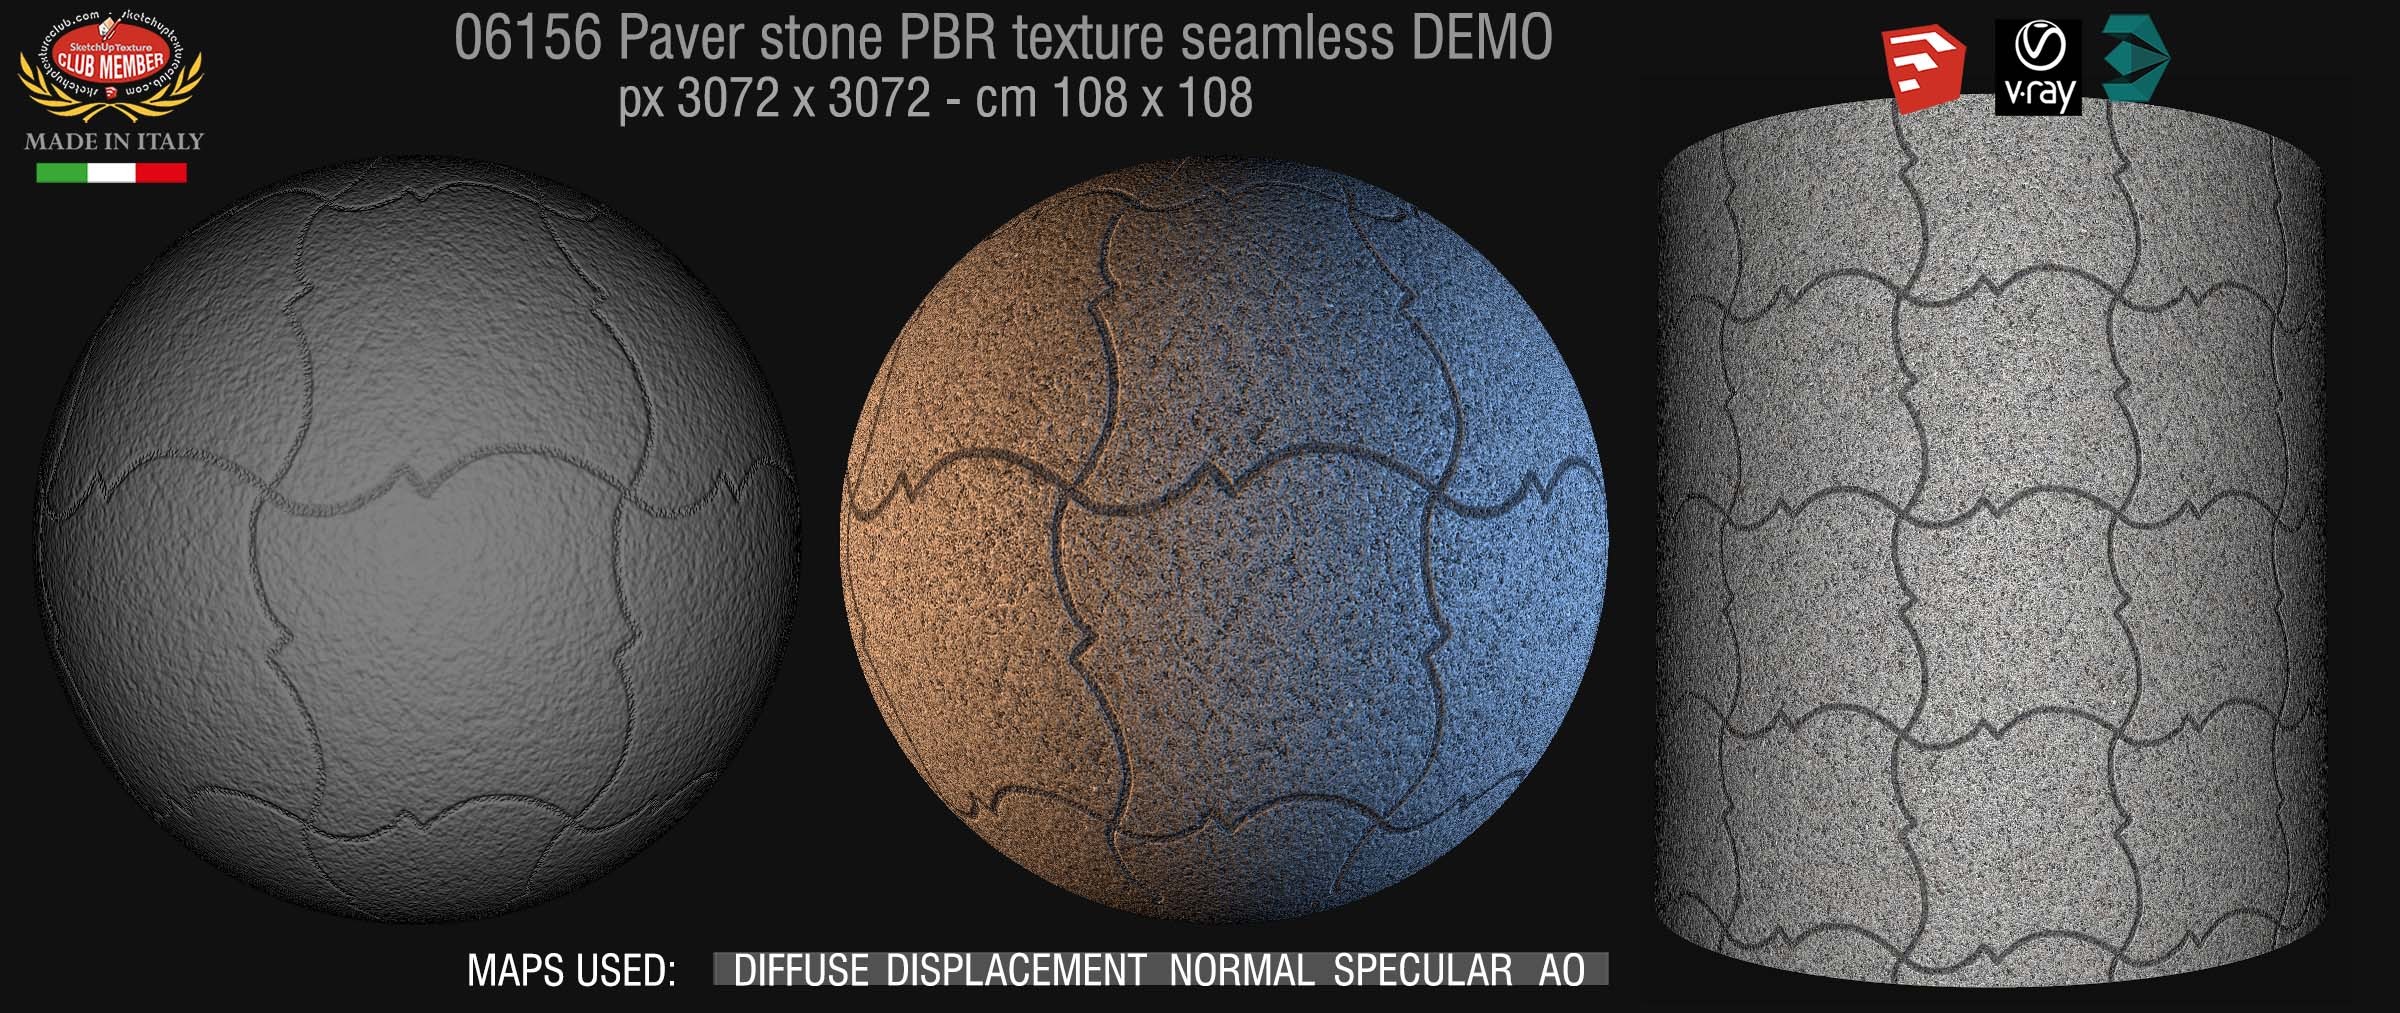 06156 paver stone PBR texture seamless DEMO